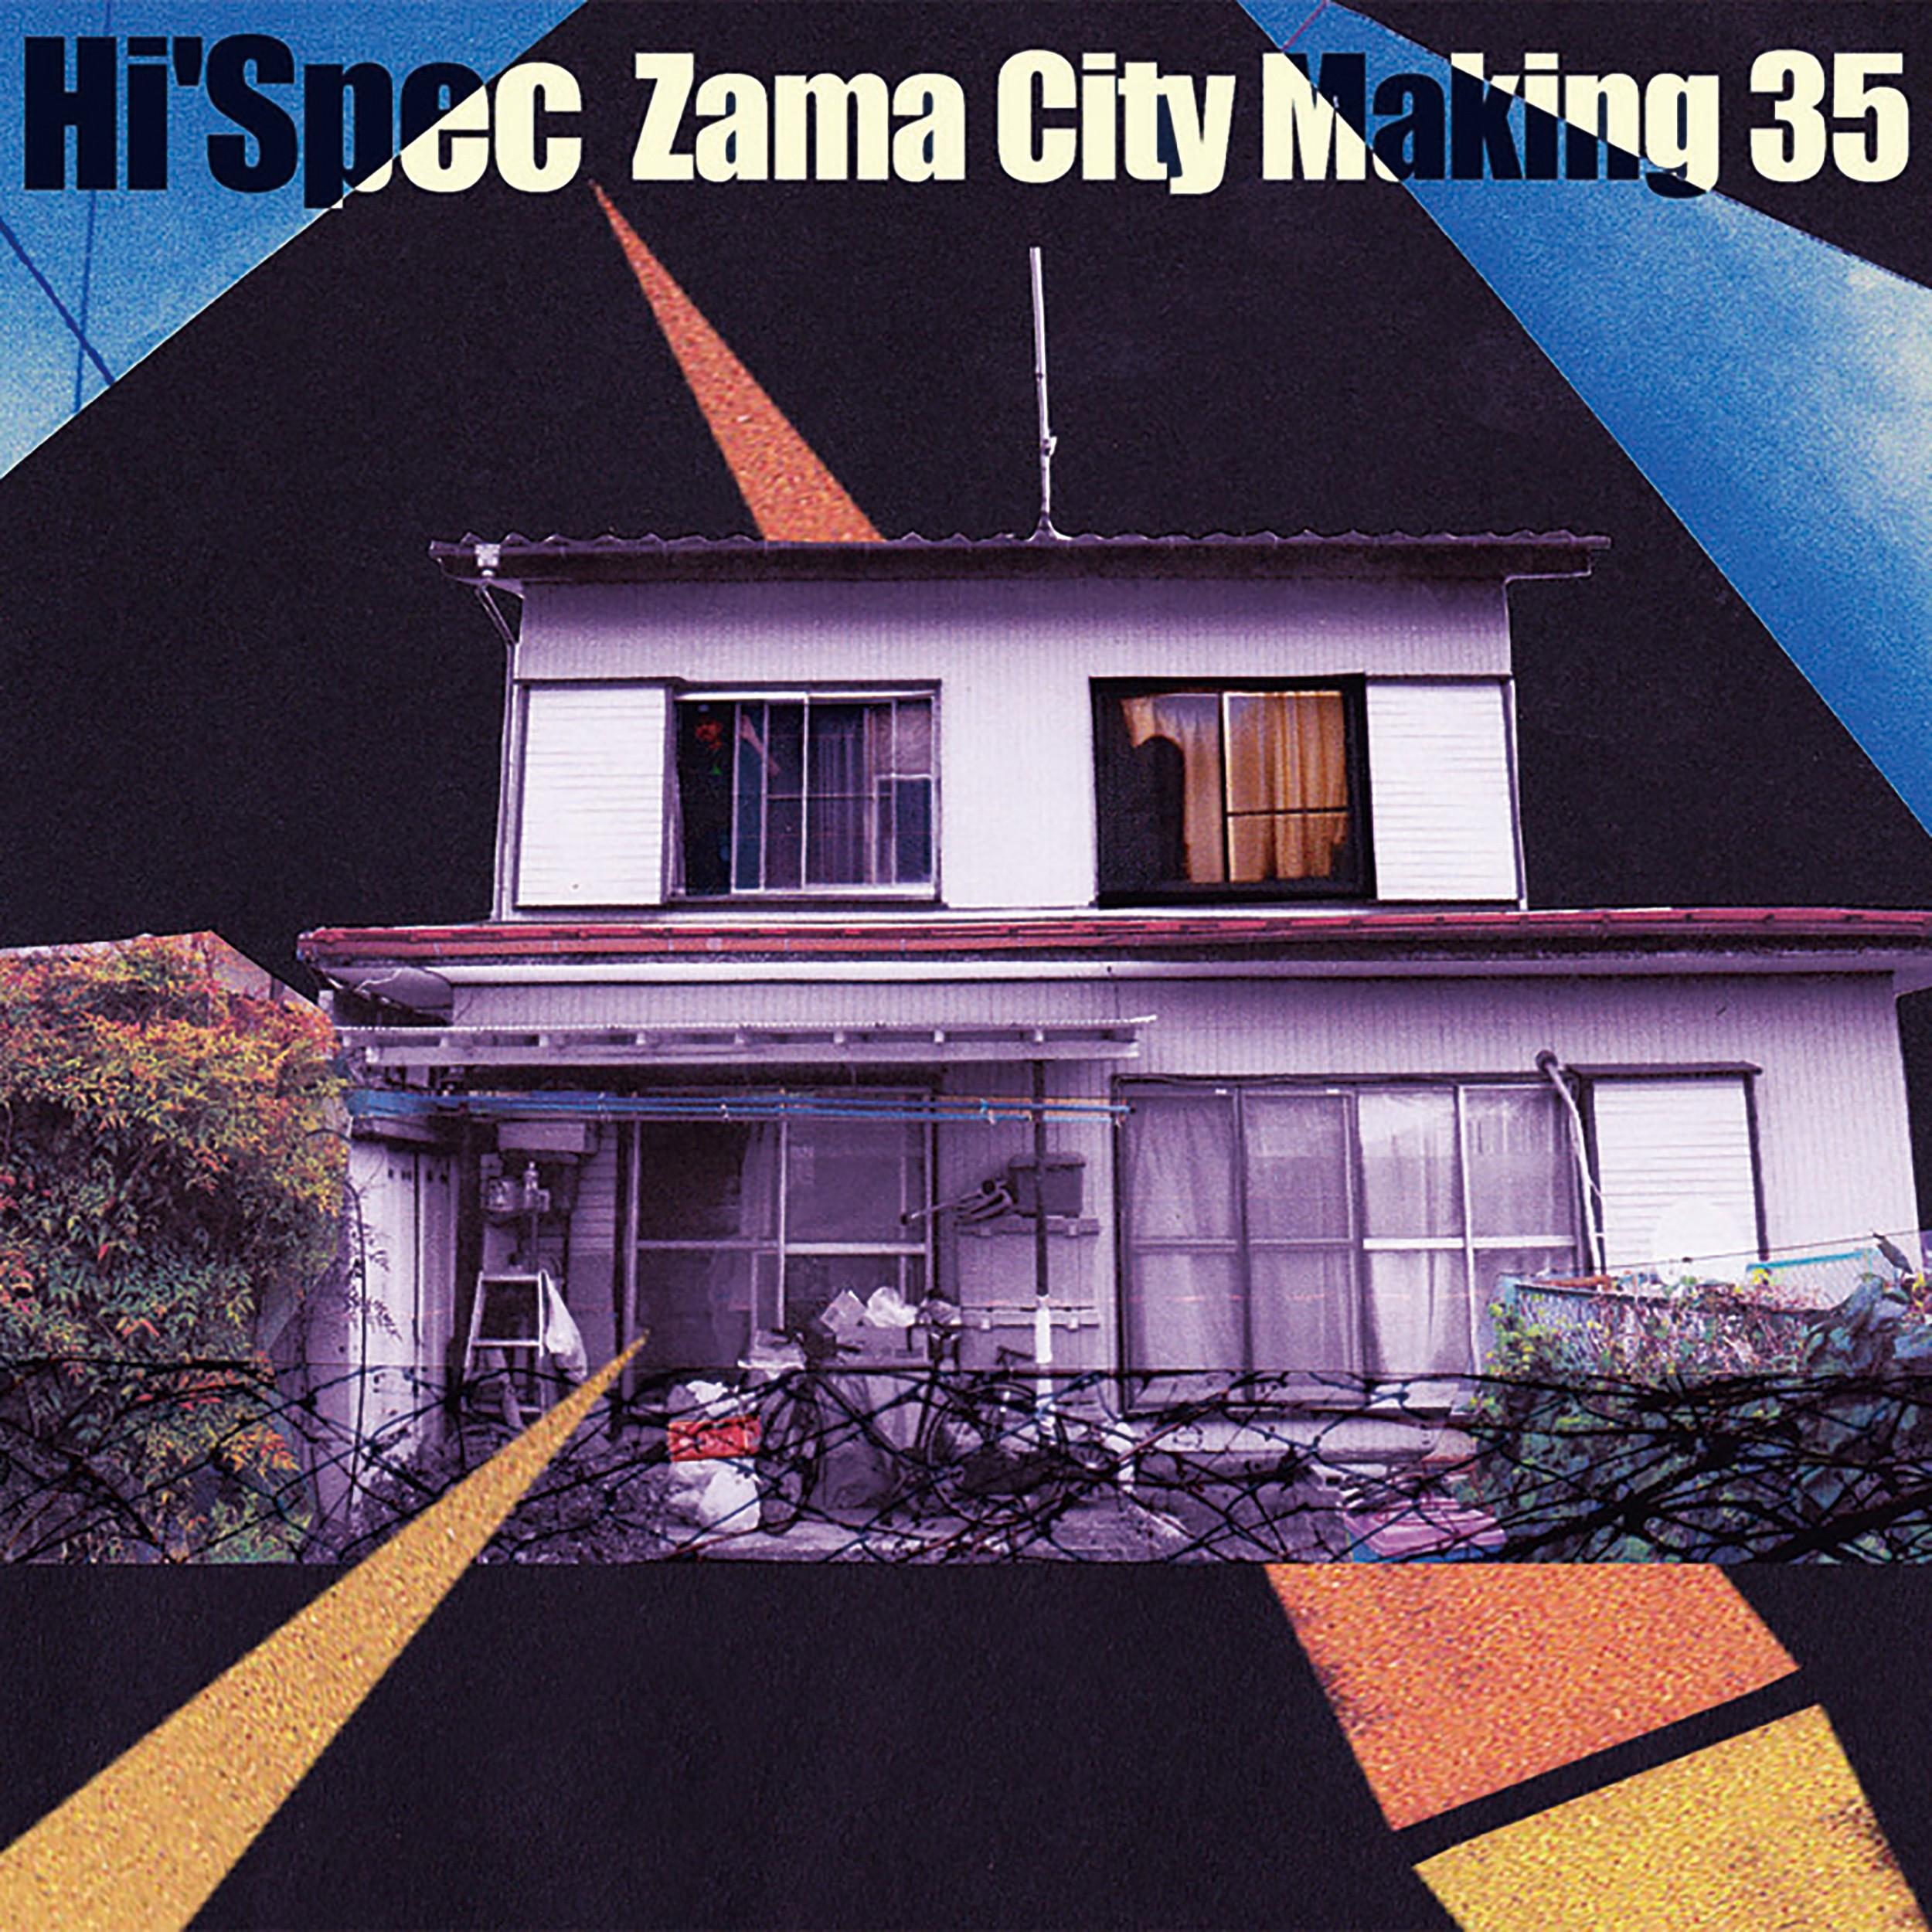 Zama City Making 35 / Hi'Spec